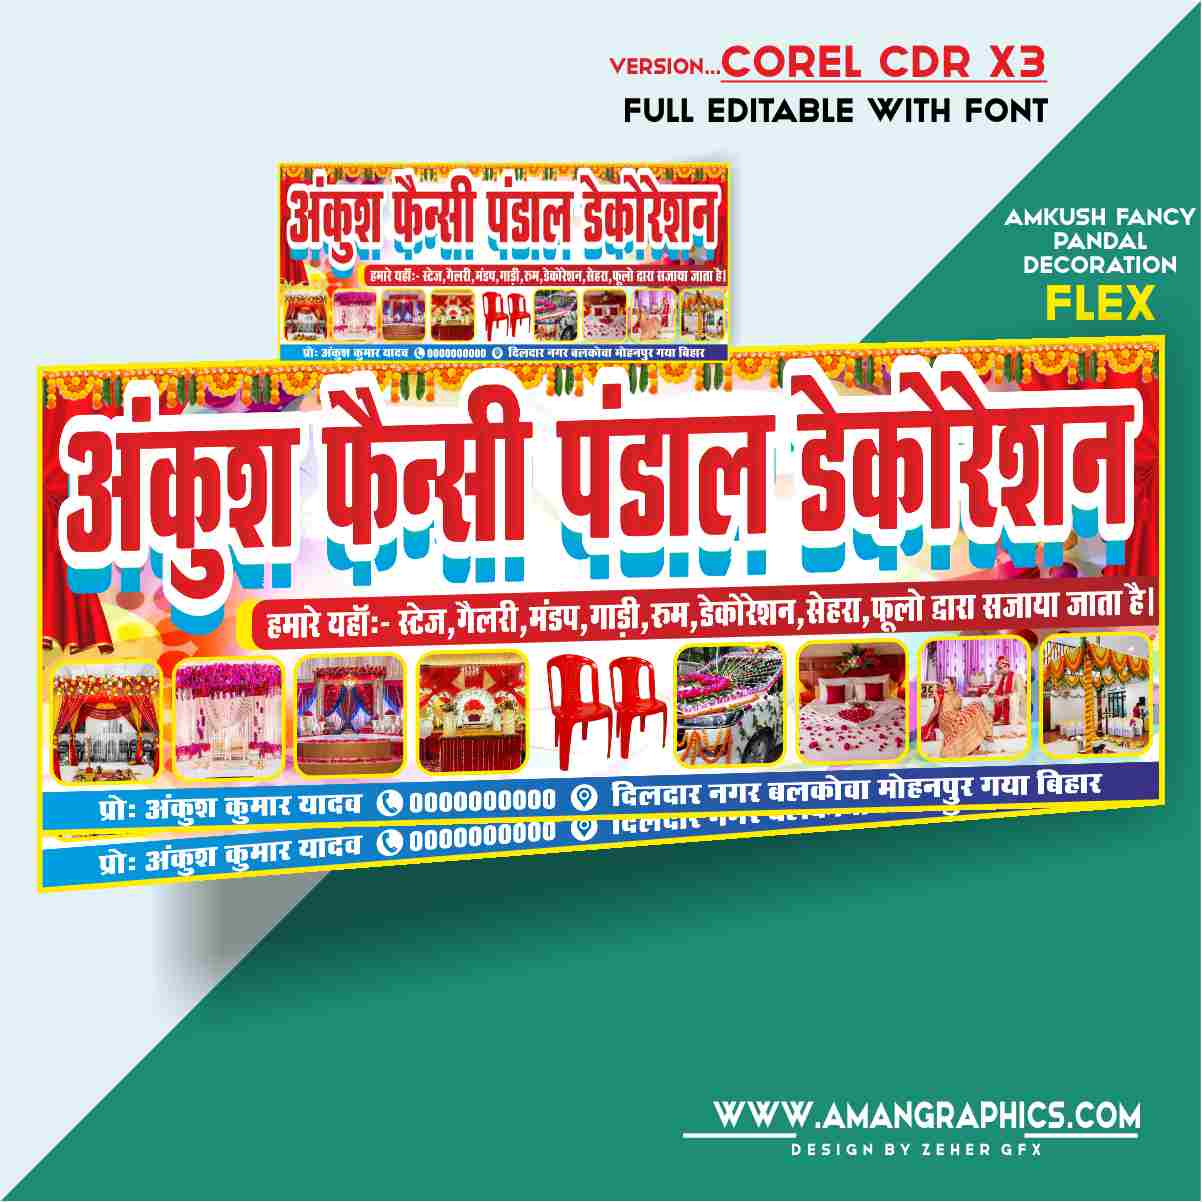 Ankush Fancy Pandal Decoration Banner Design Cdr File FLEX BANNER FLEX